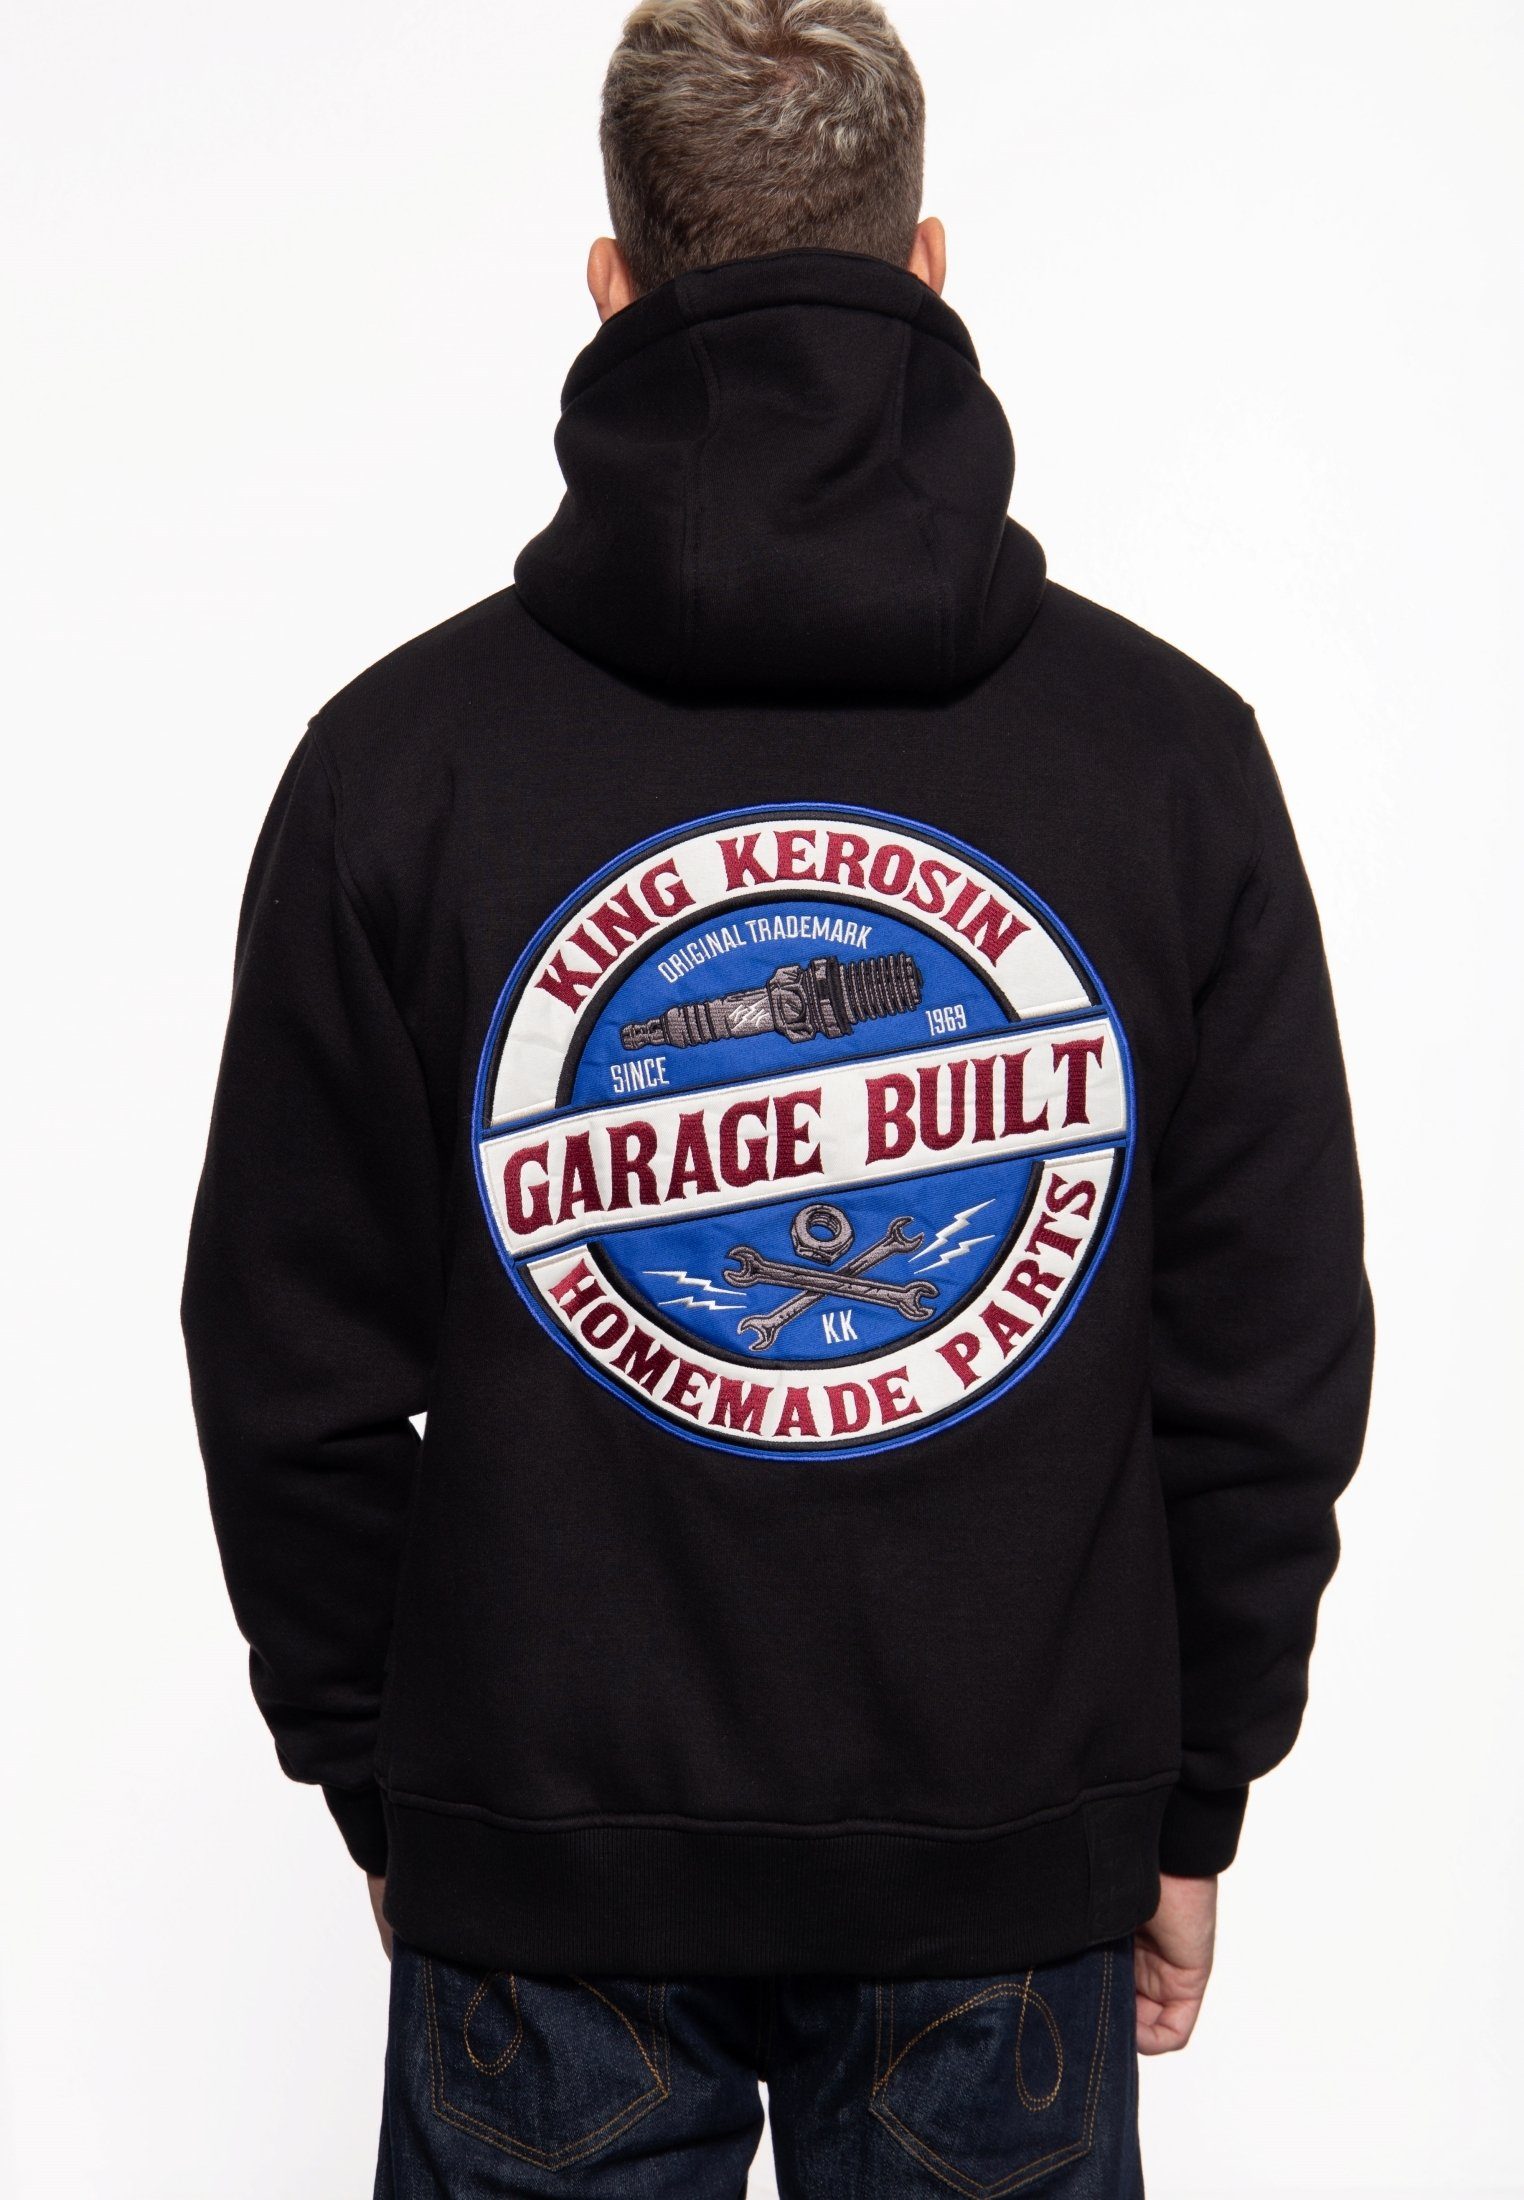 Kapuzensweatjacke Garage Stickereien Built KingKerosin mit